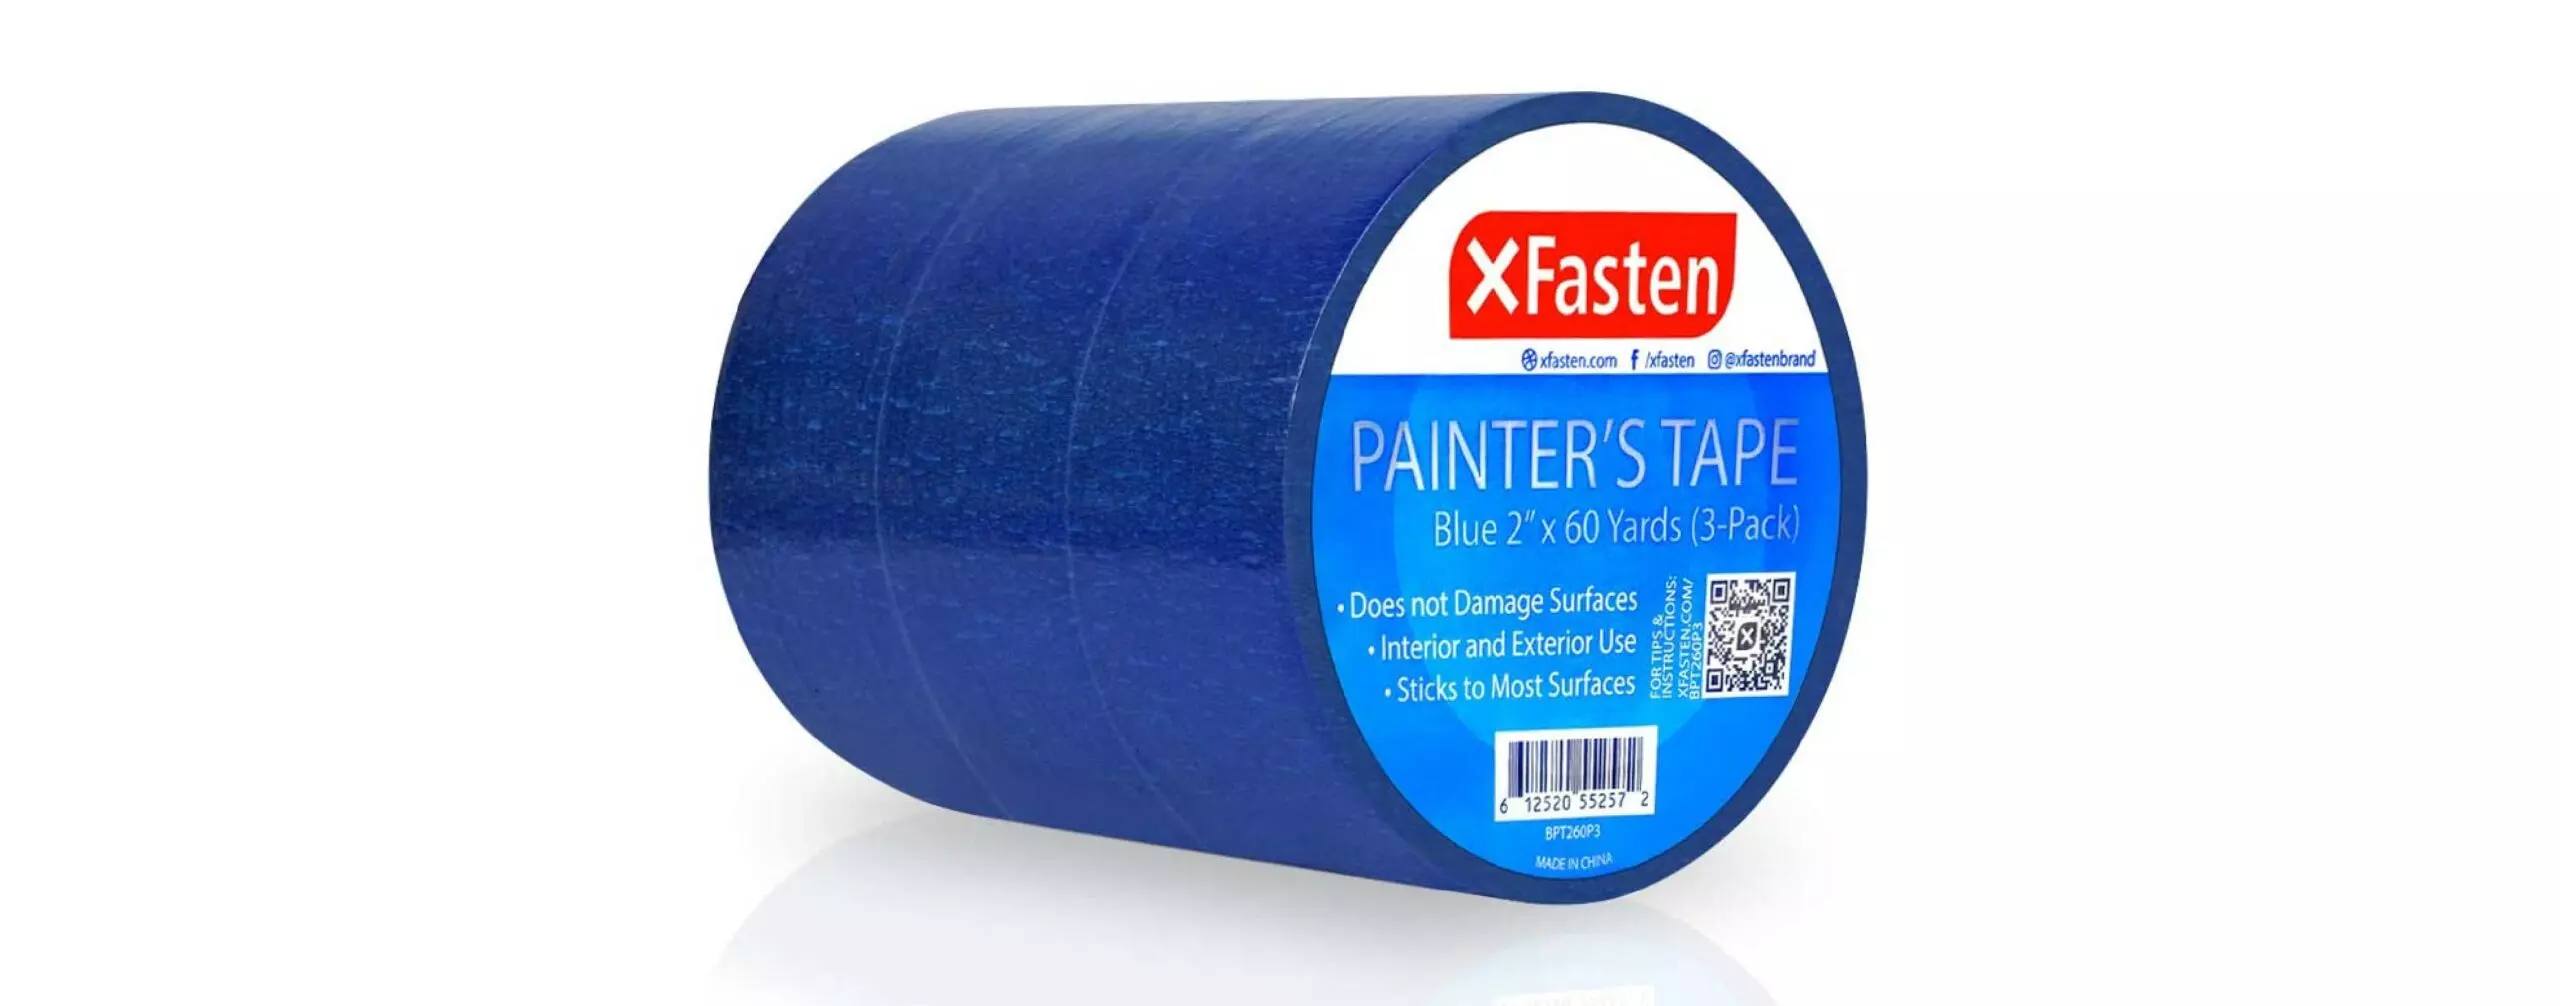 XFasten Professional Blue Painters Tape